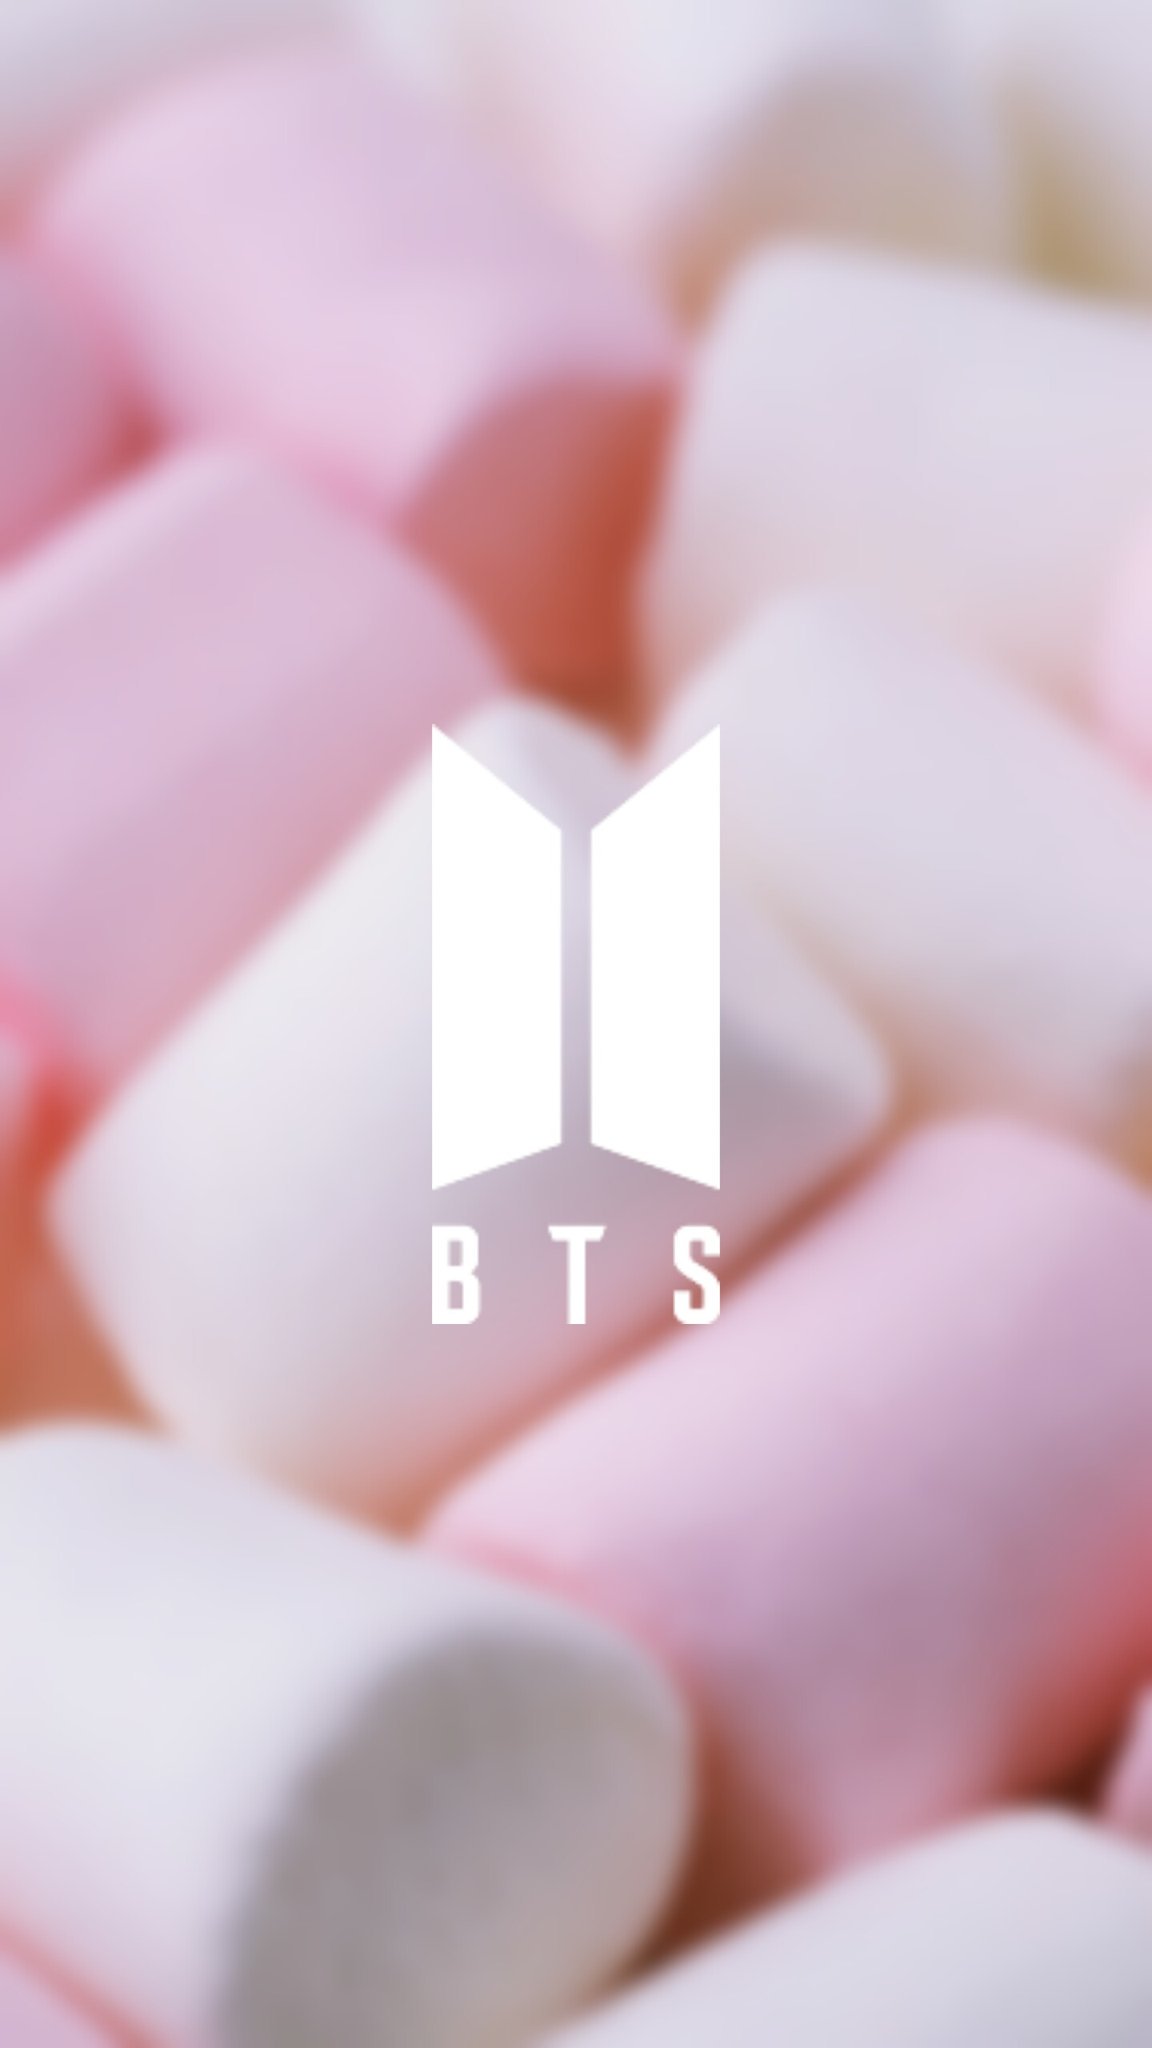 BTS_twt wallpaper - [WALLPAPER] BTS NEW LOGO: Pink and Mint aesthetics